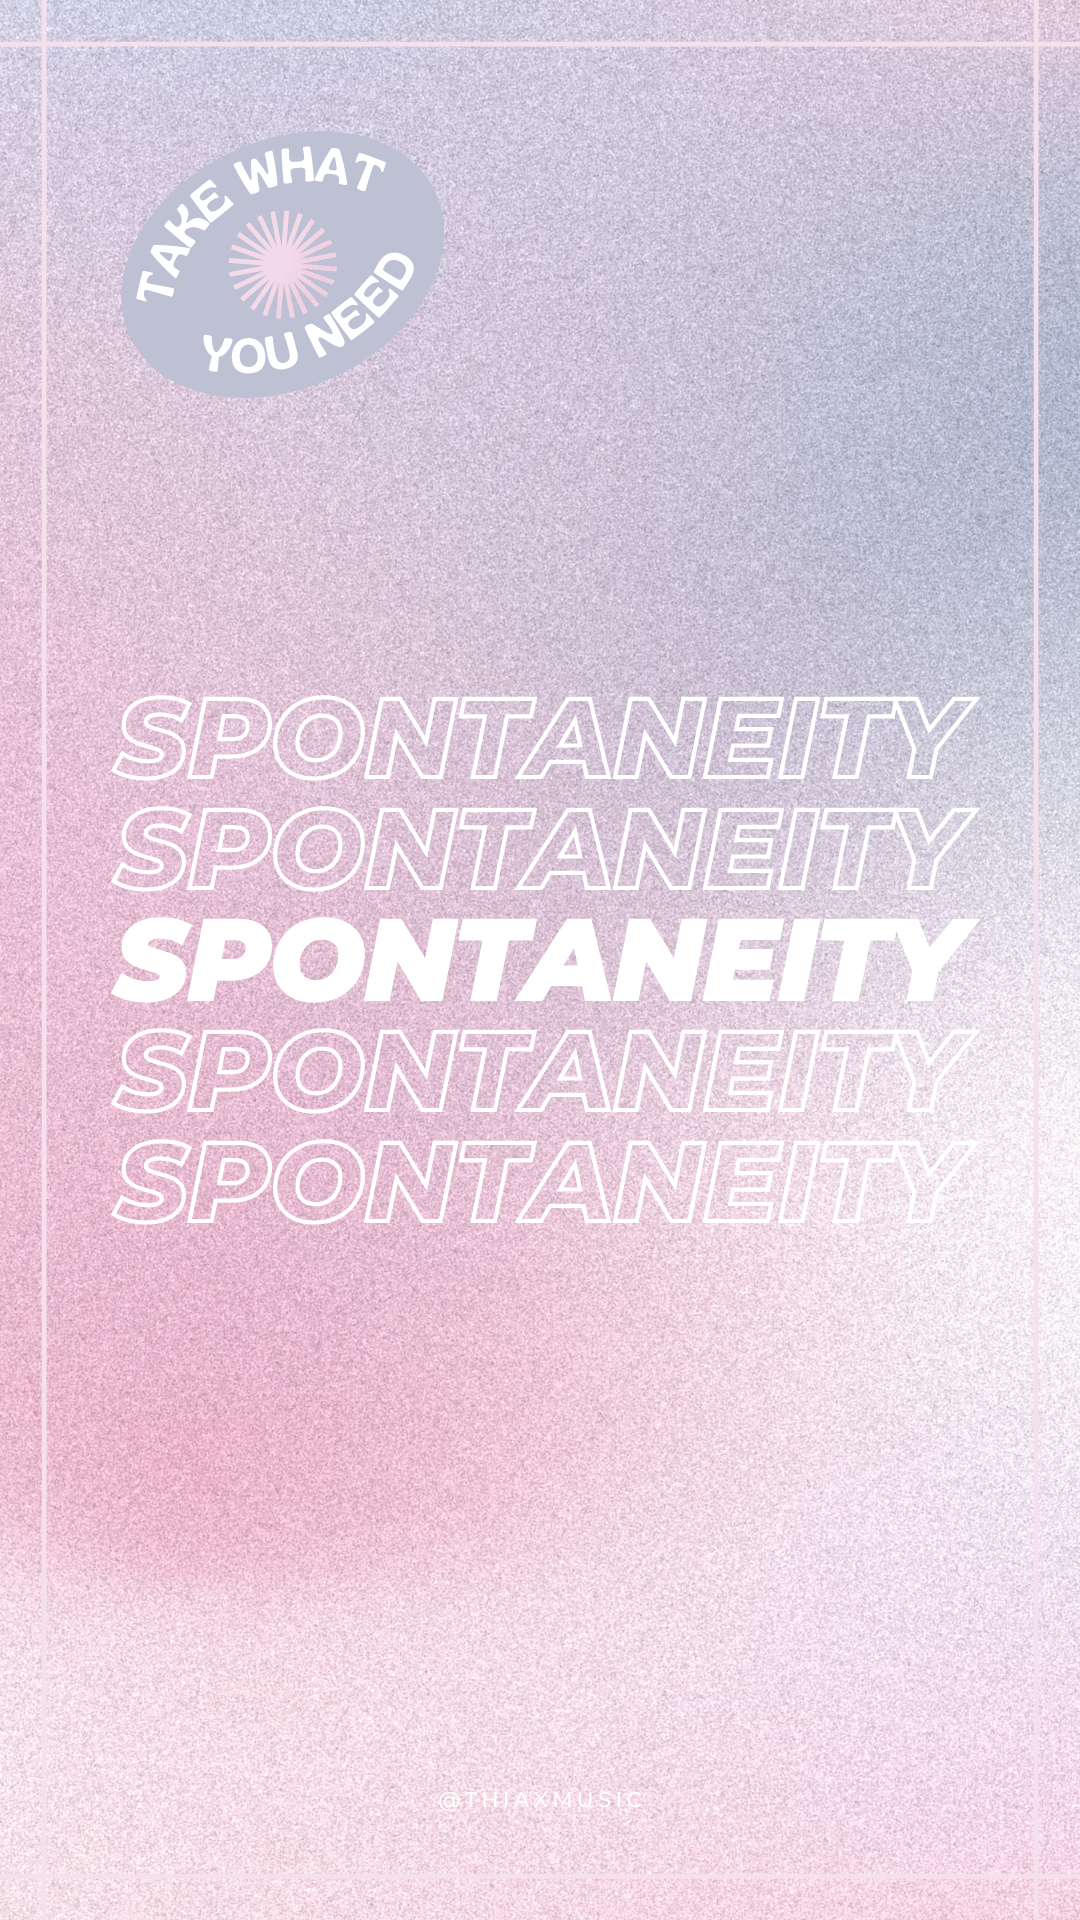 15 Spontaneity.png